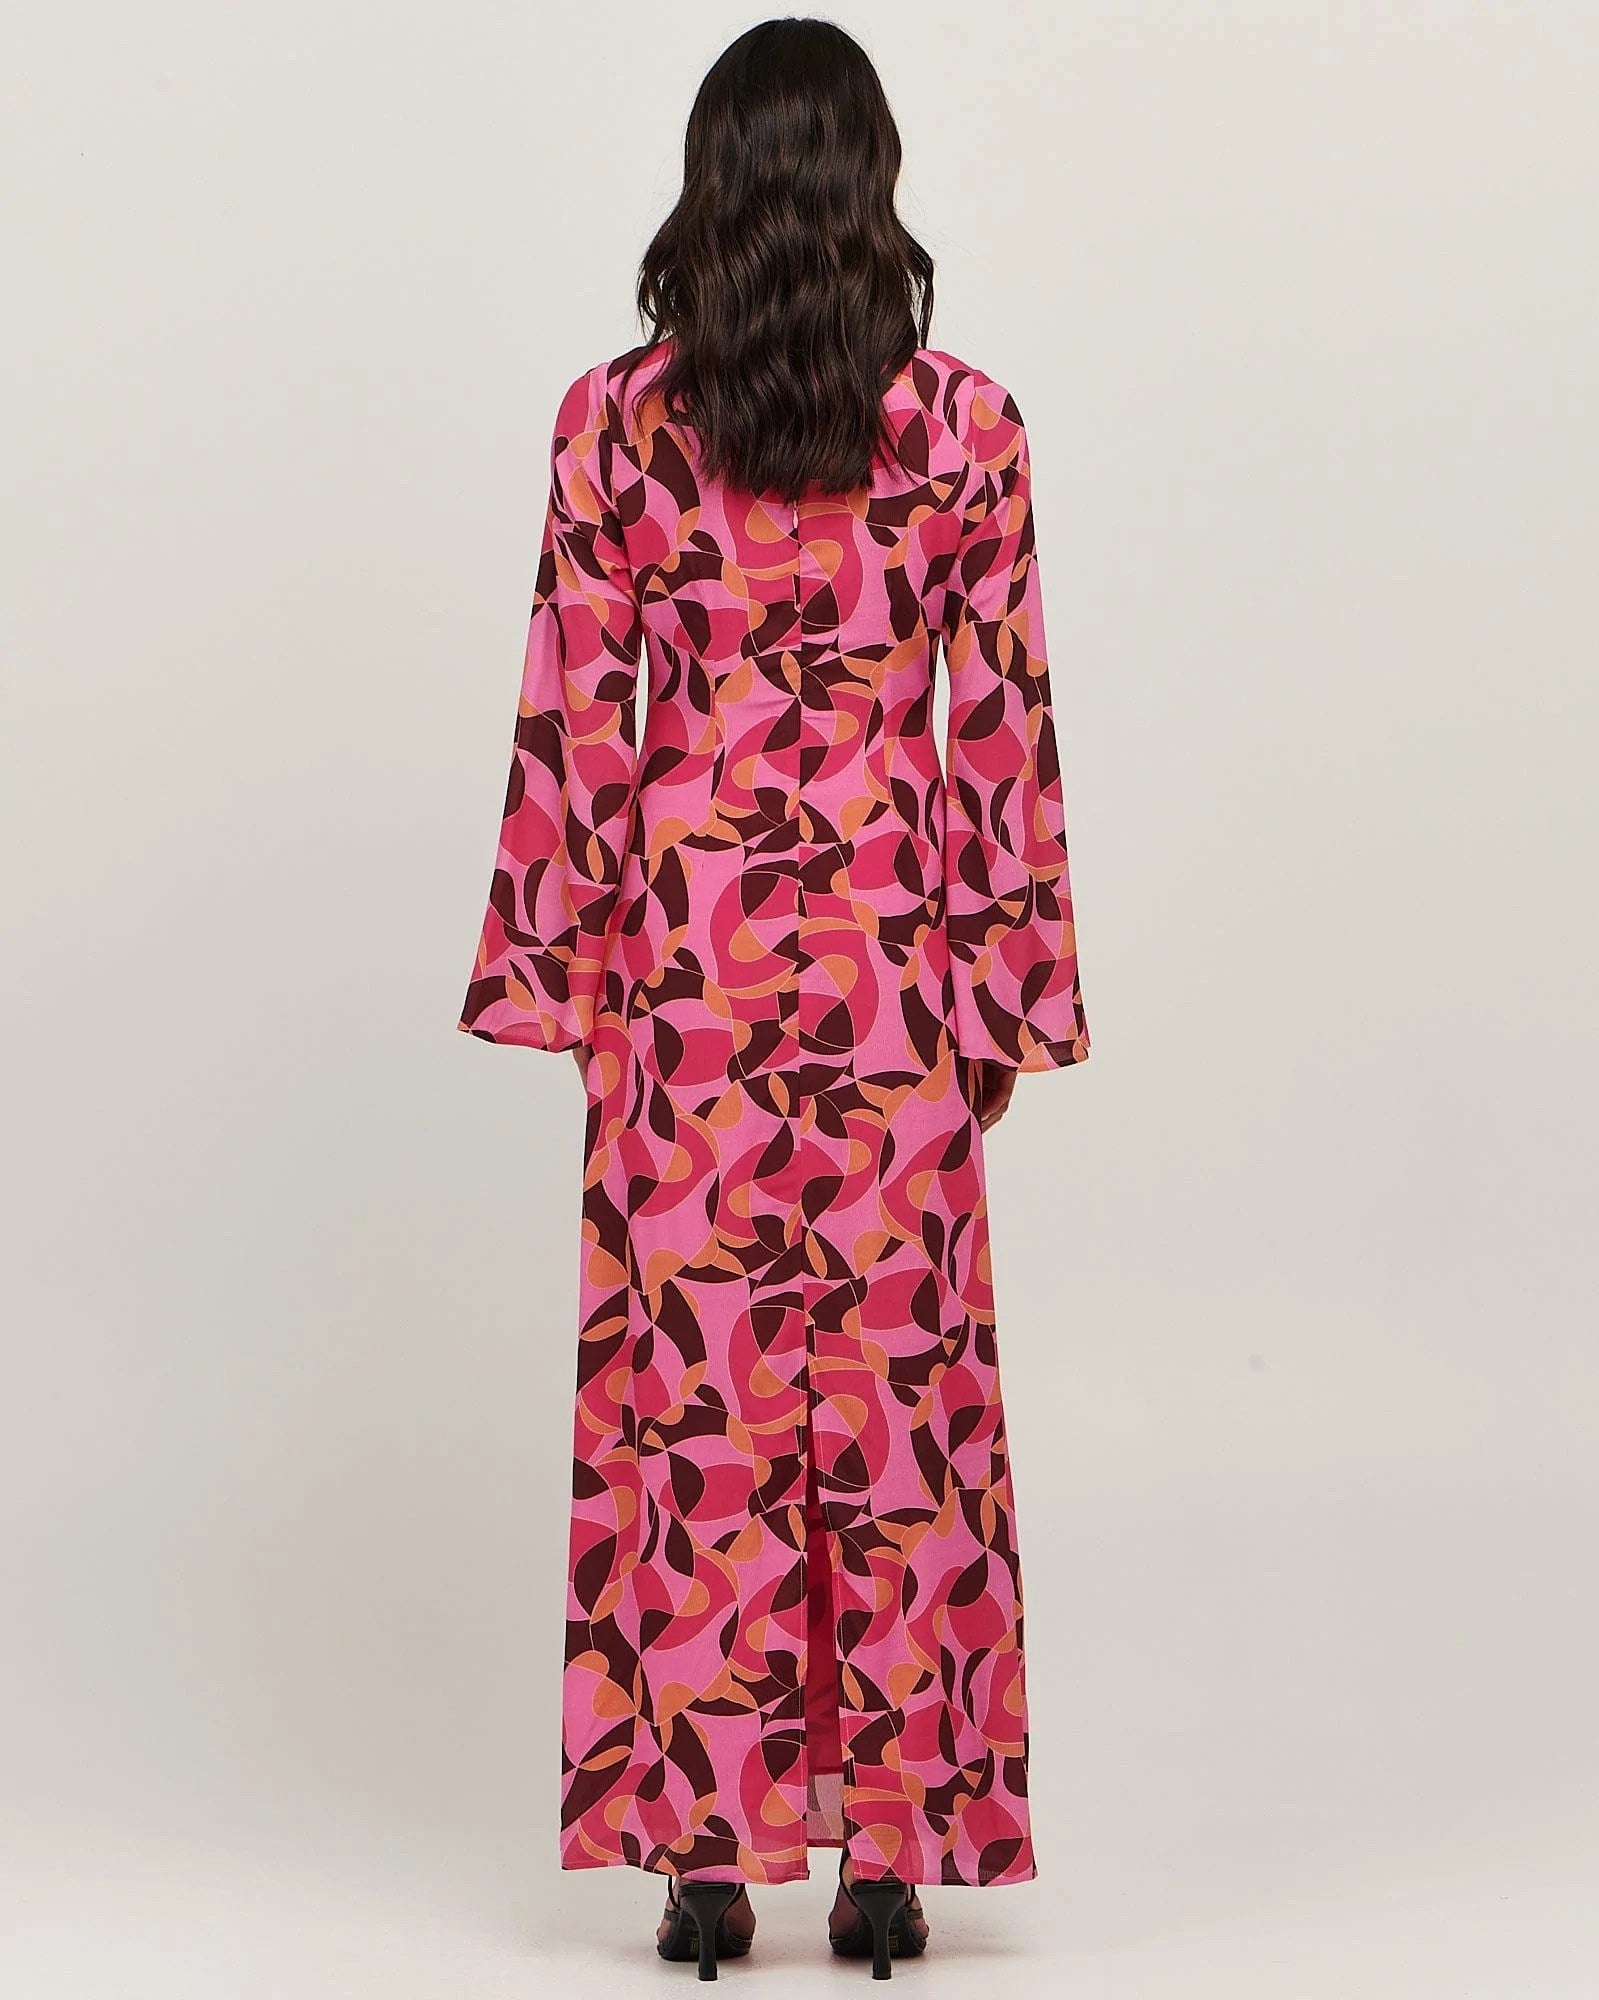 CATALINA MAXI DRESS - ABSTRACT SWIRL - Leela Rose Boutique